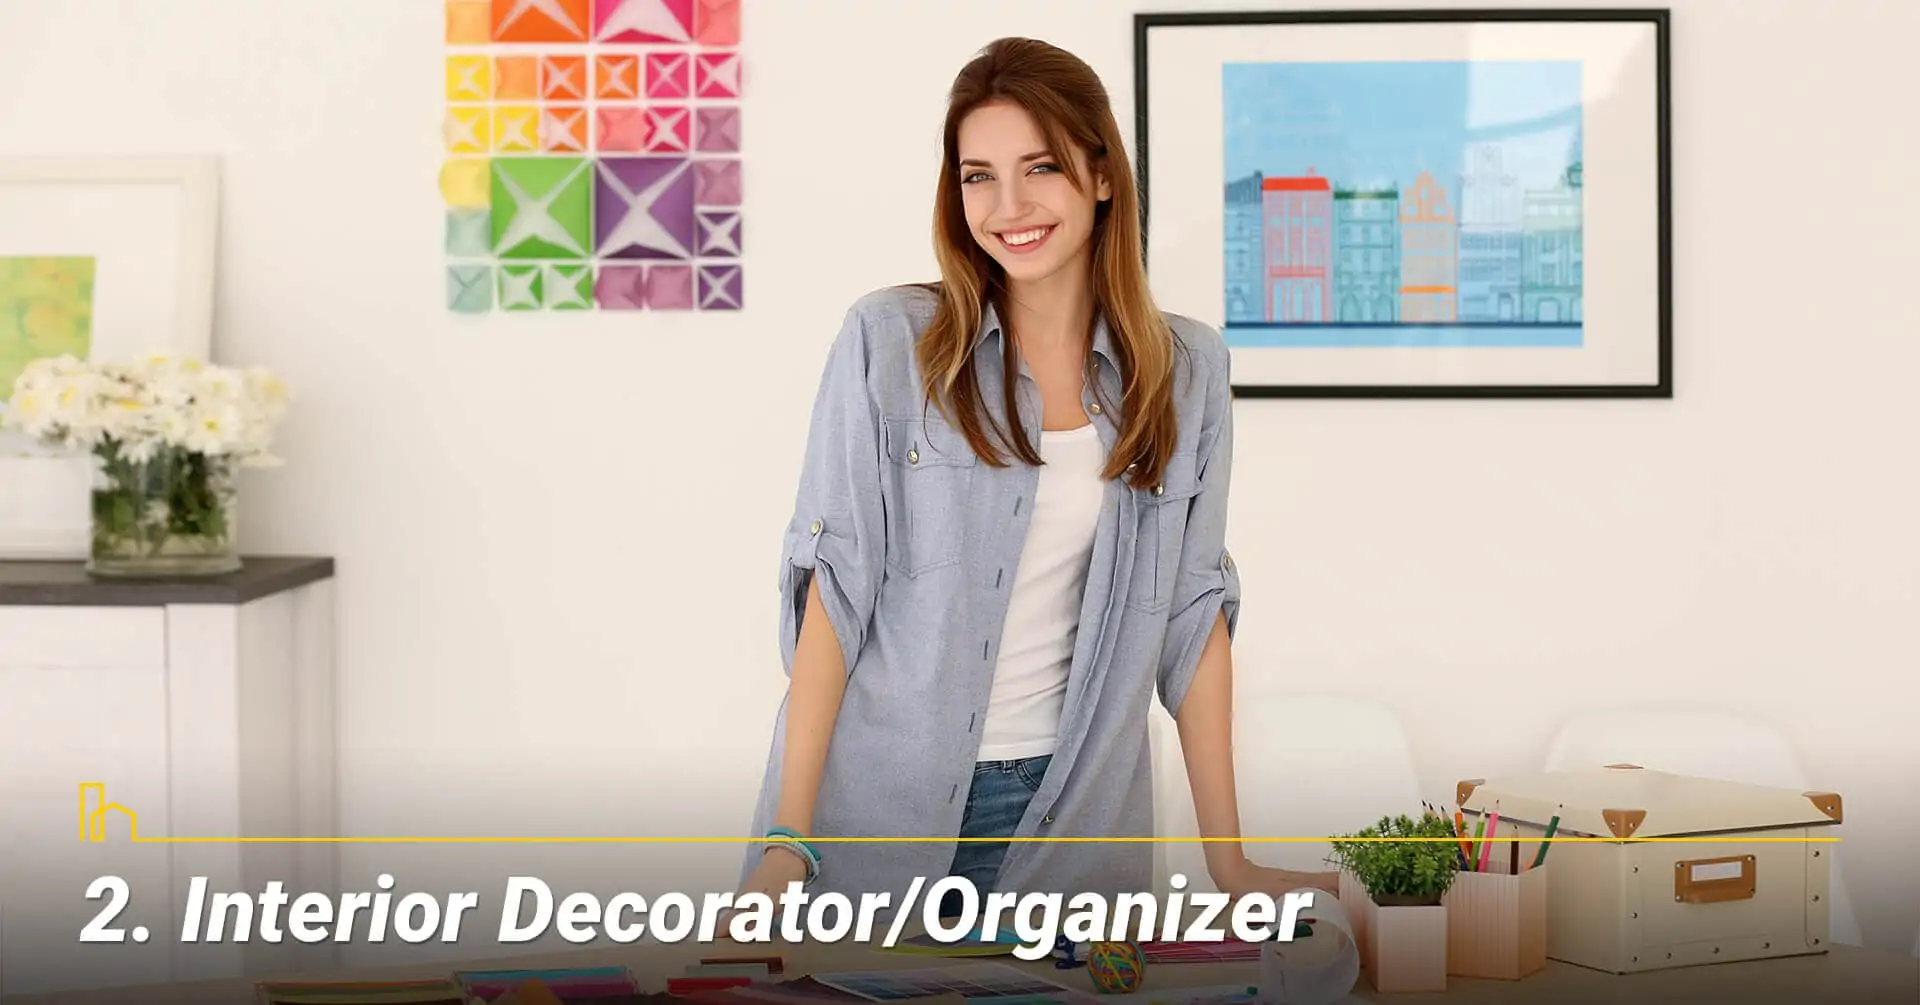 Interior Decorator/Organizer, help decorate inside the house, interior designer